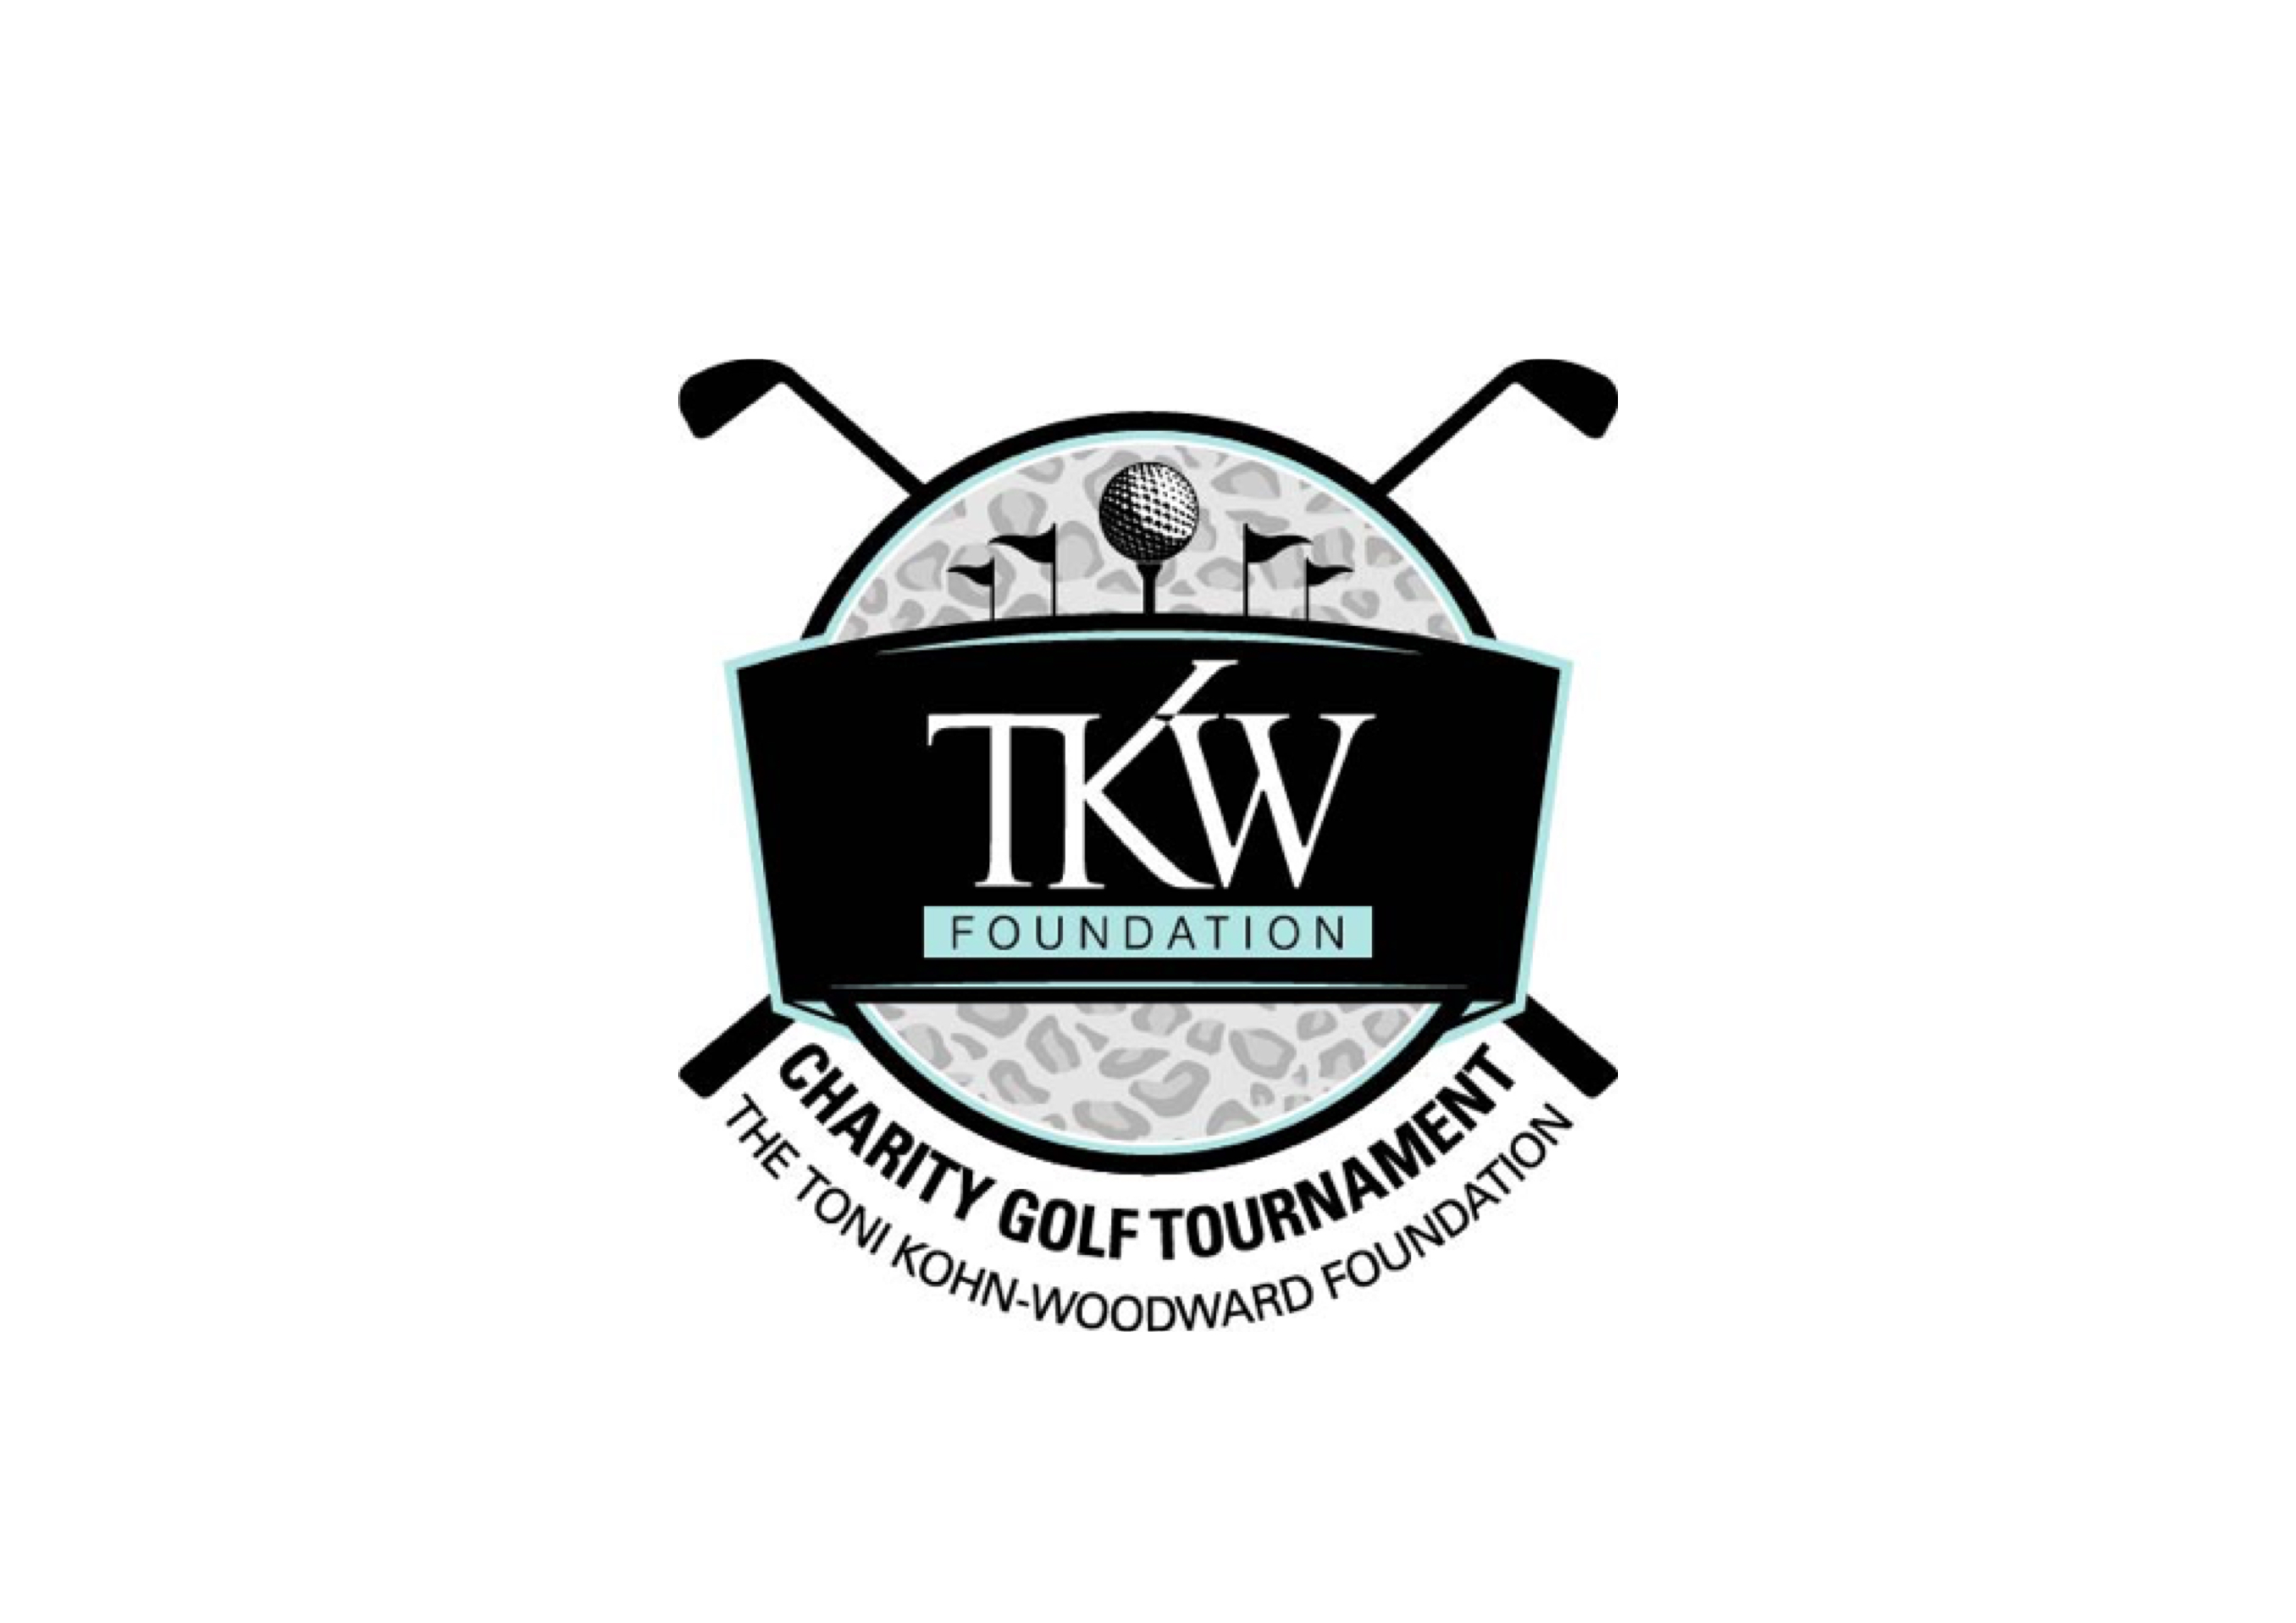 THE TONI KOHN-WOODWARD 1ST ANNUAL CHARITY GOLF TOURNAMENT